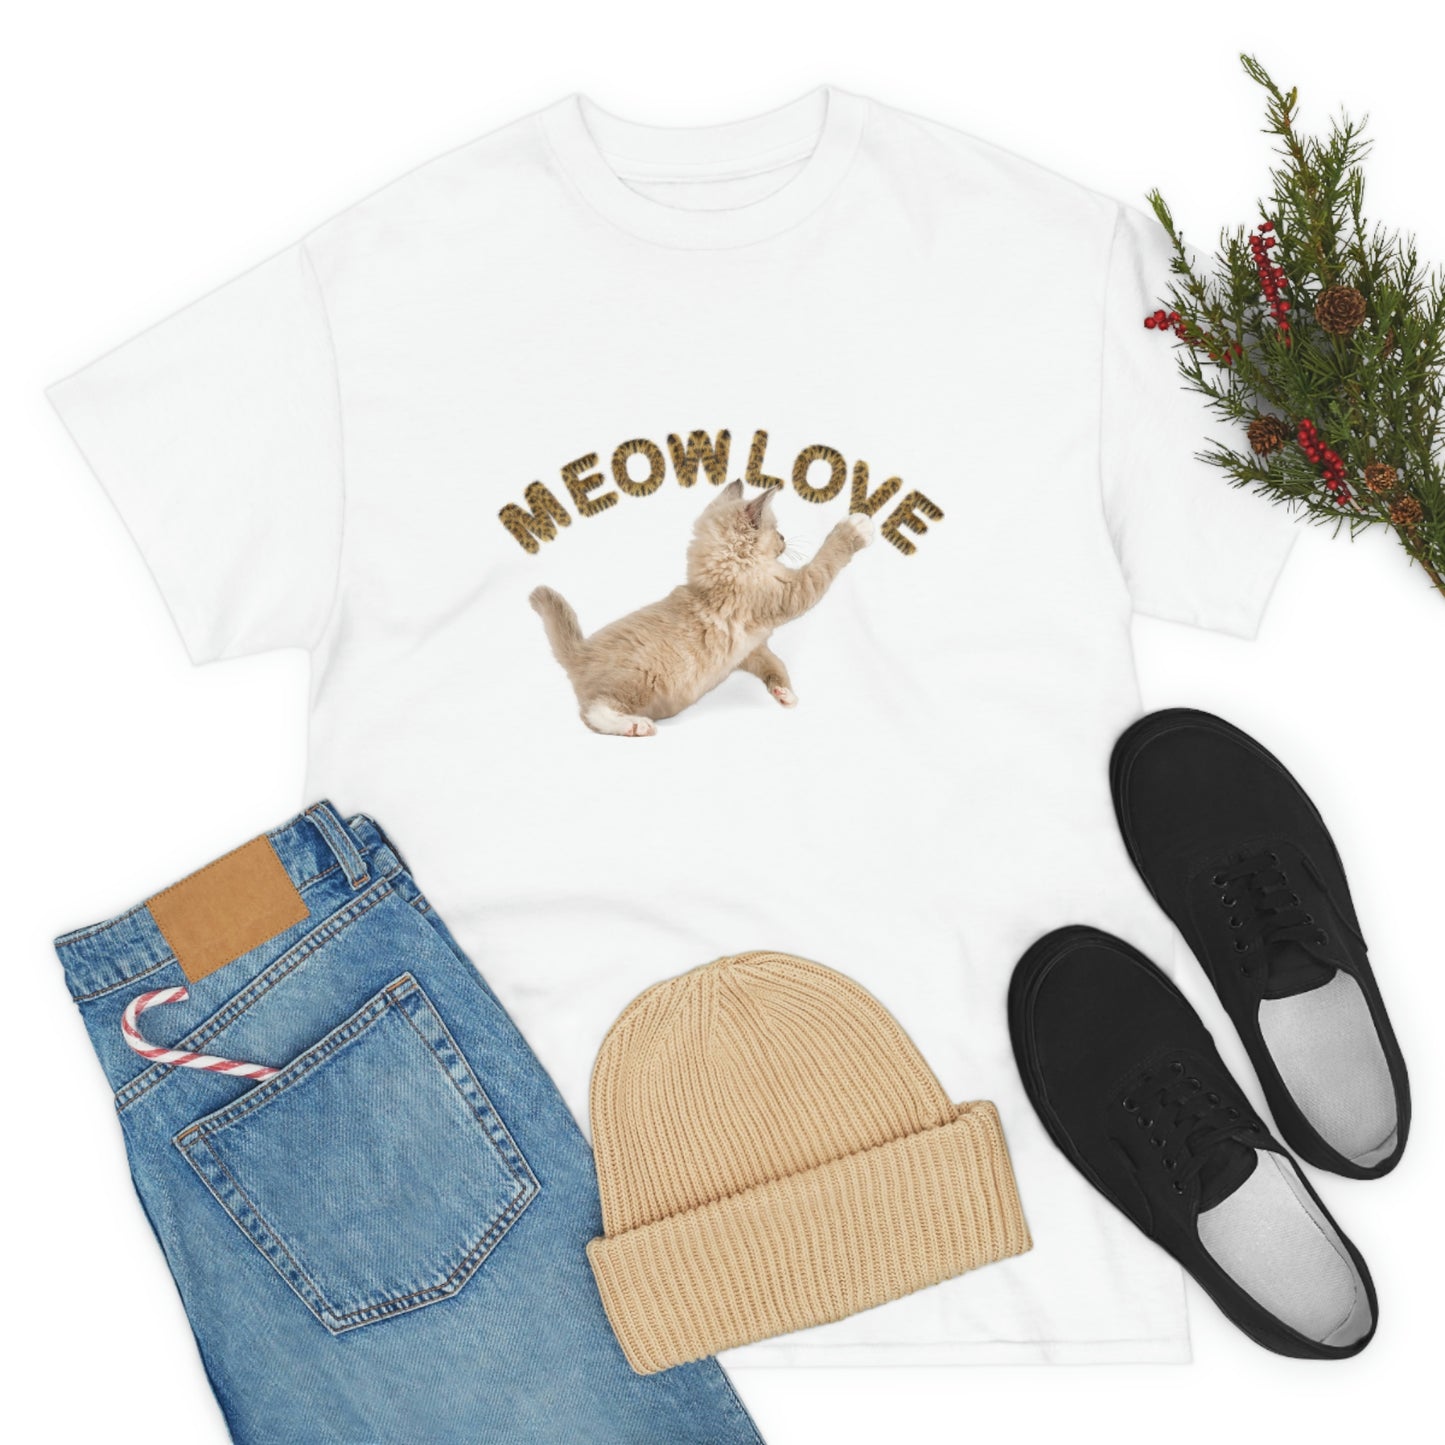 Meow Love Kitten (Cat) Playing design Graphic tee shirt